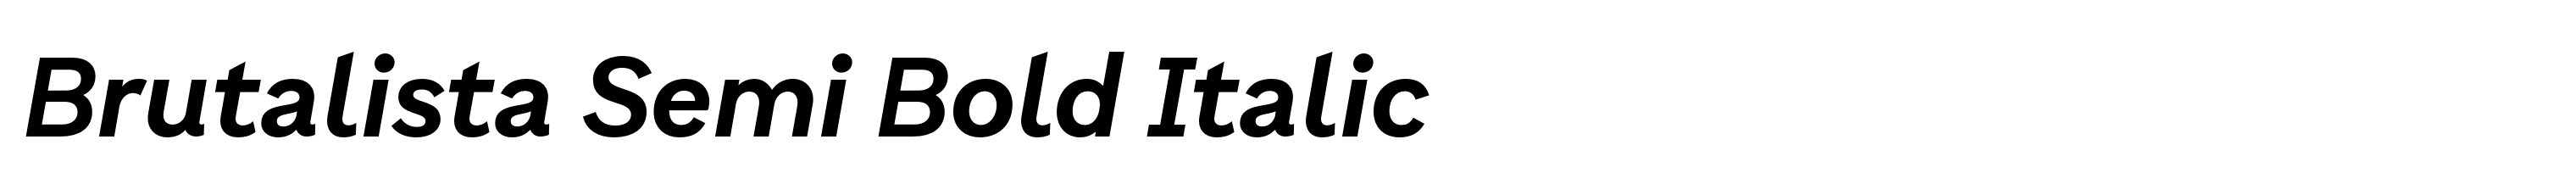 Brutalista Semi Bold Italic